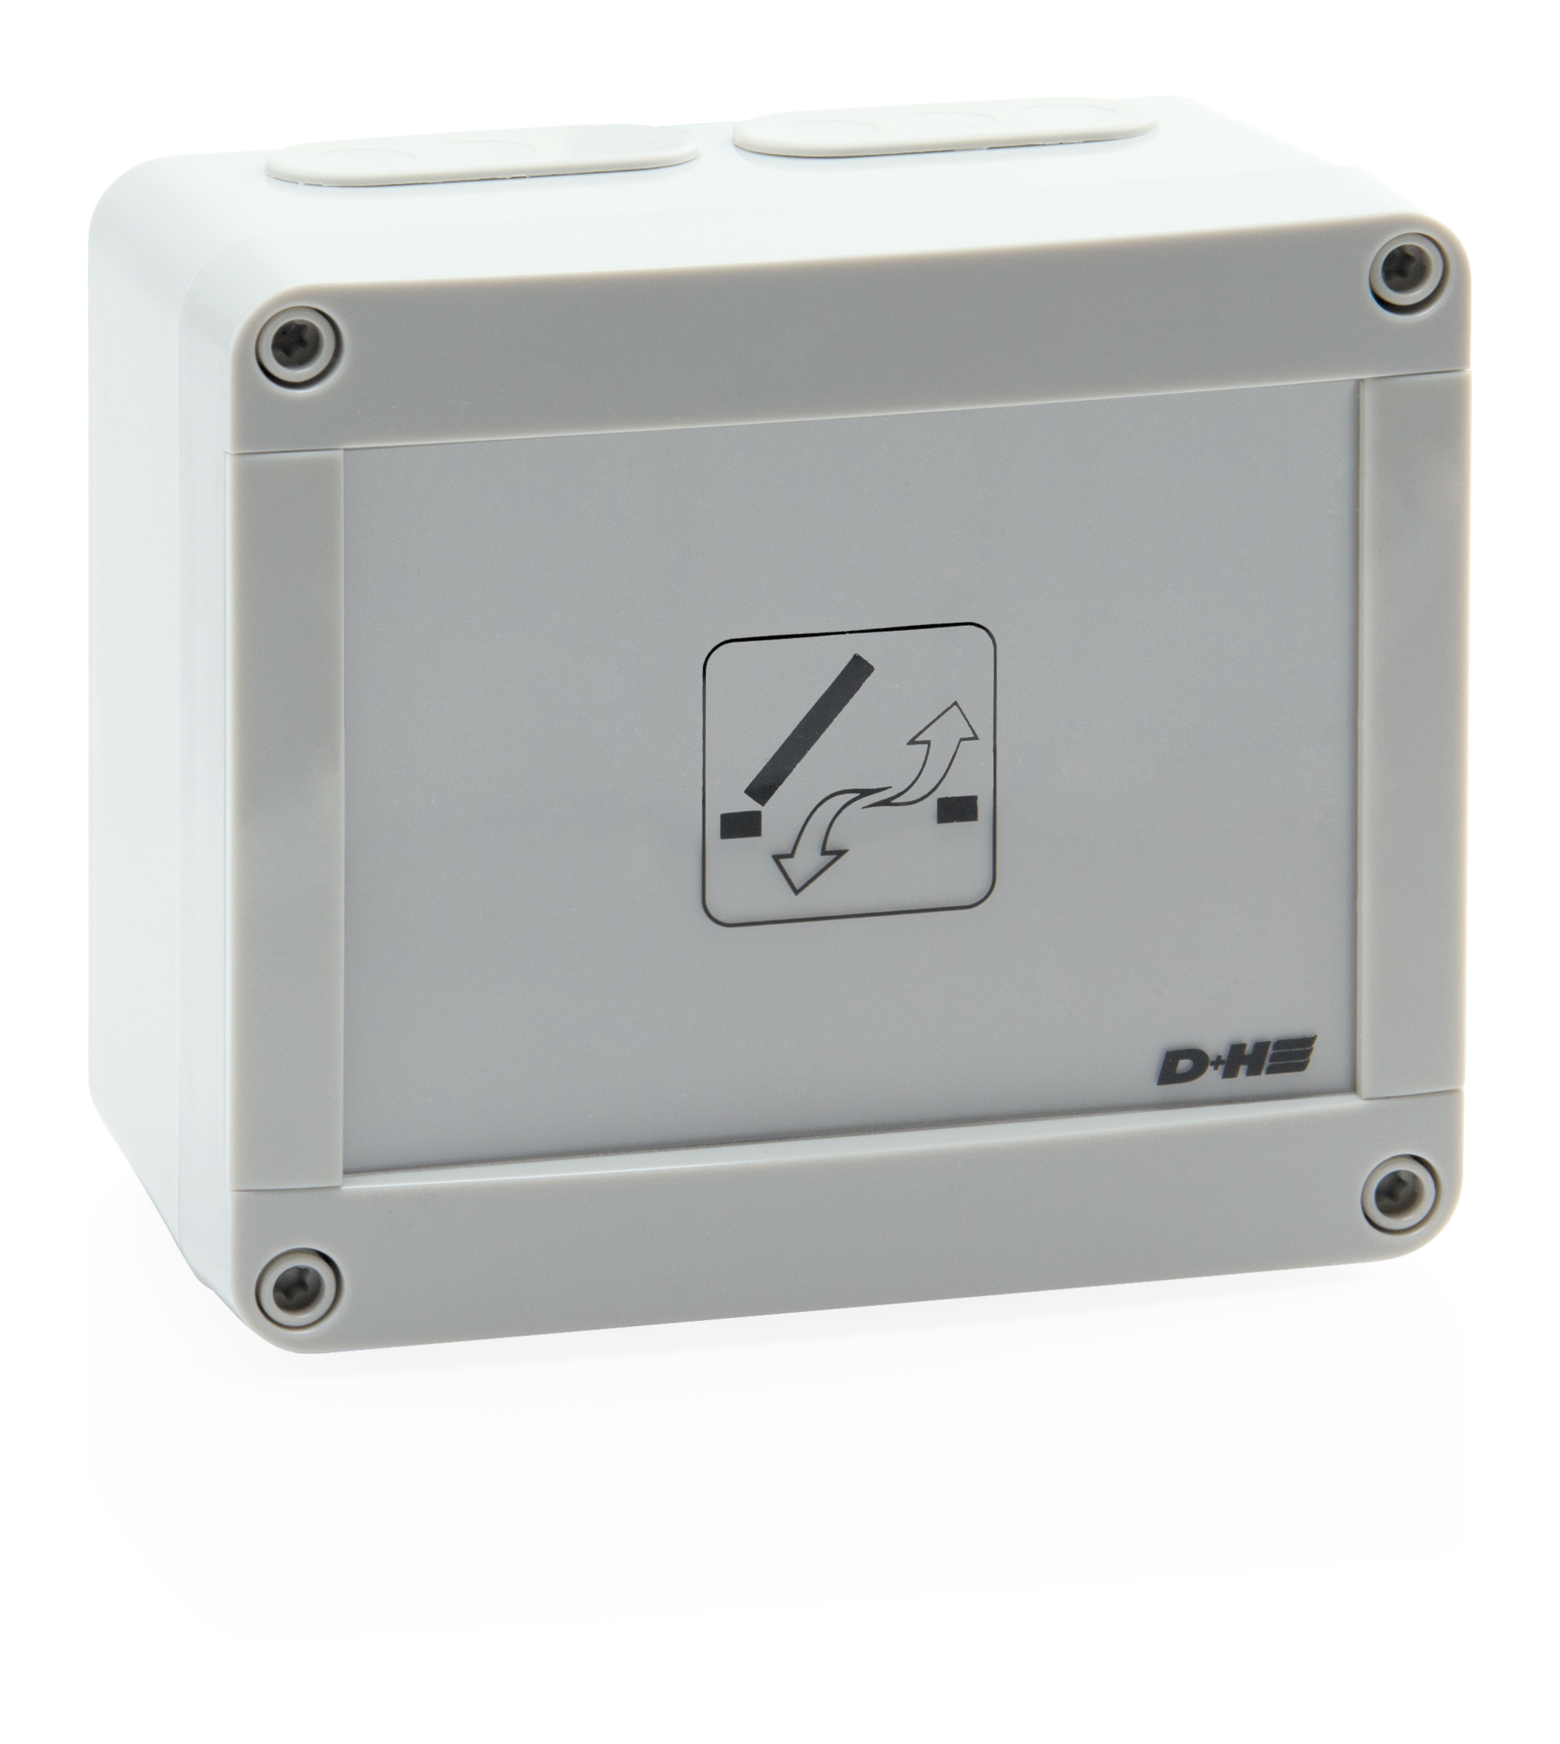 D+H CNV control panel GVL 8304-K 